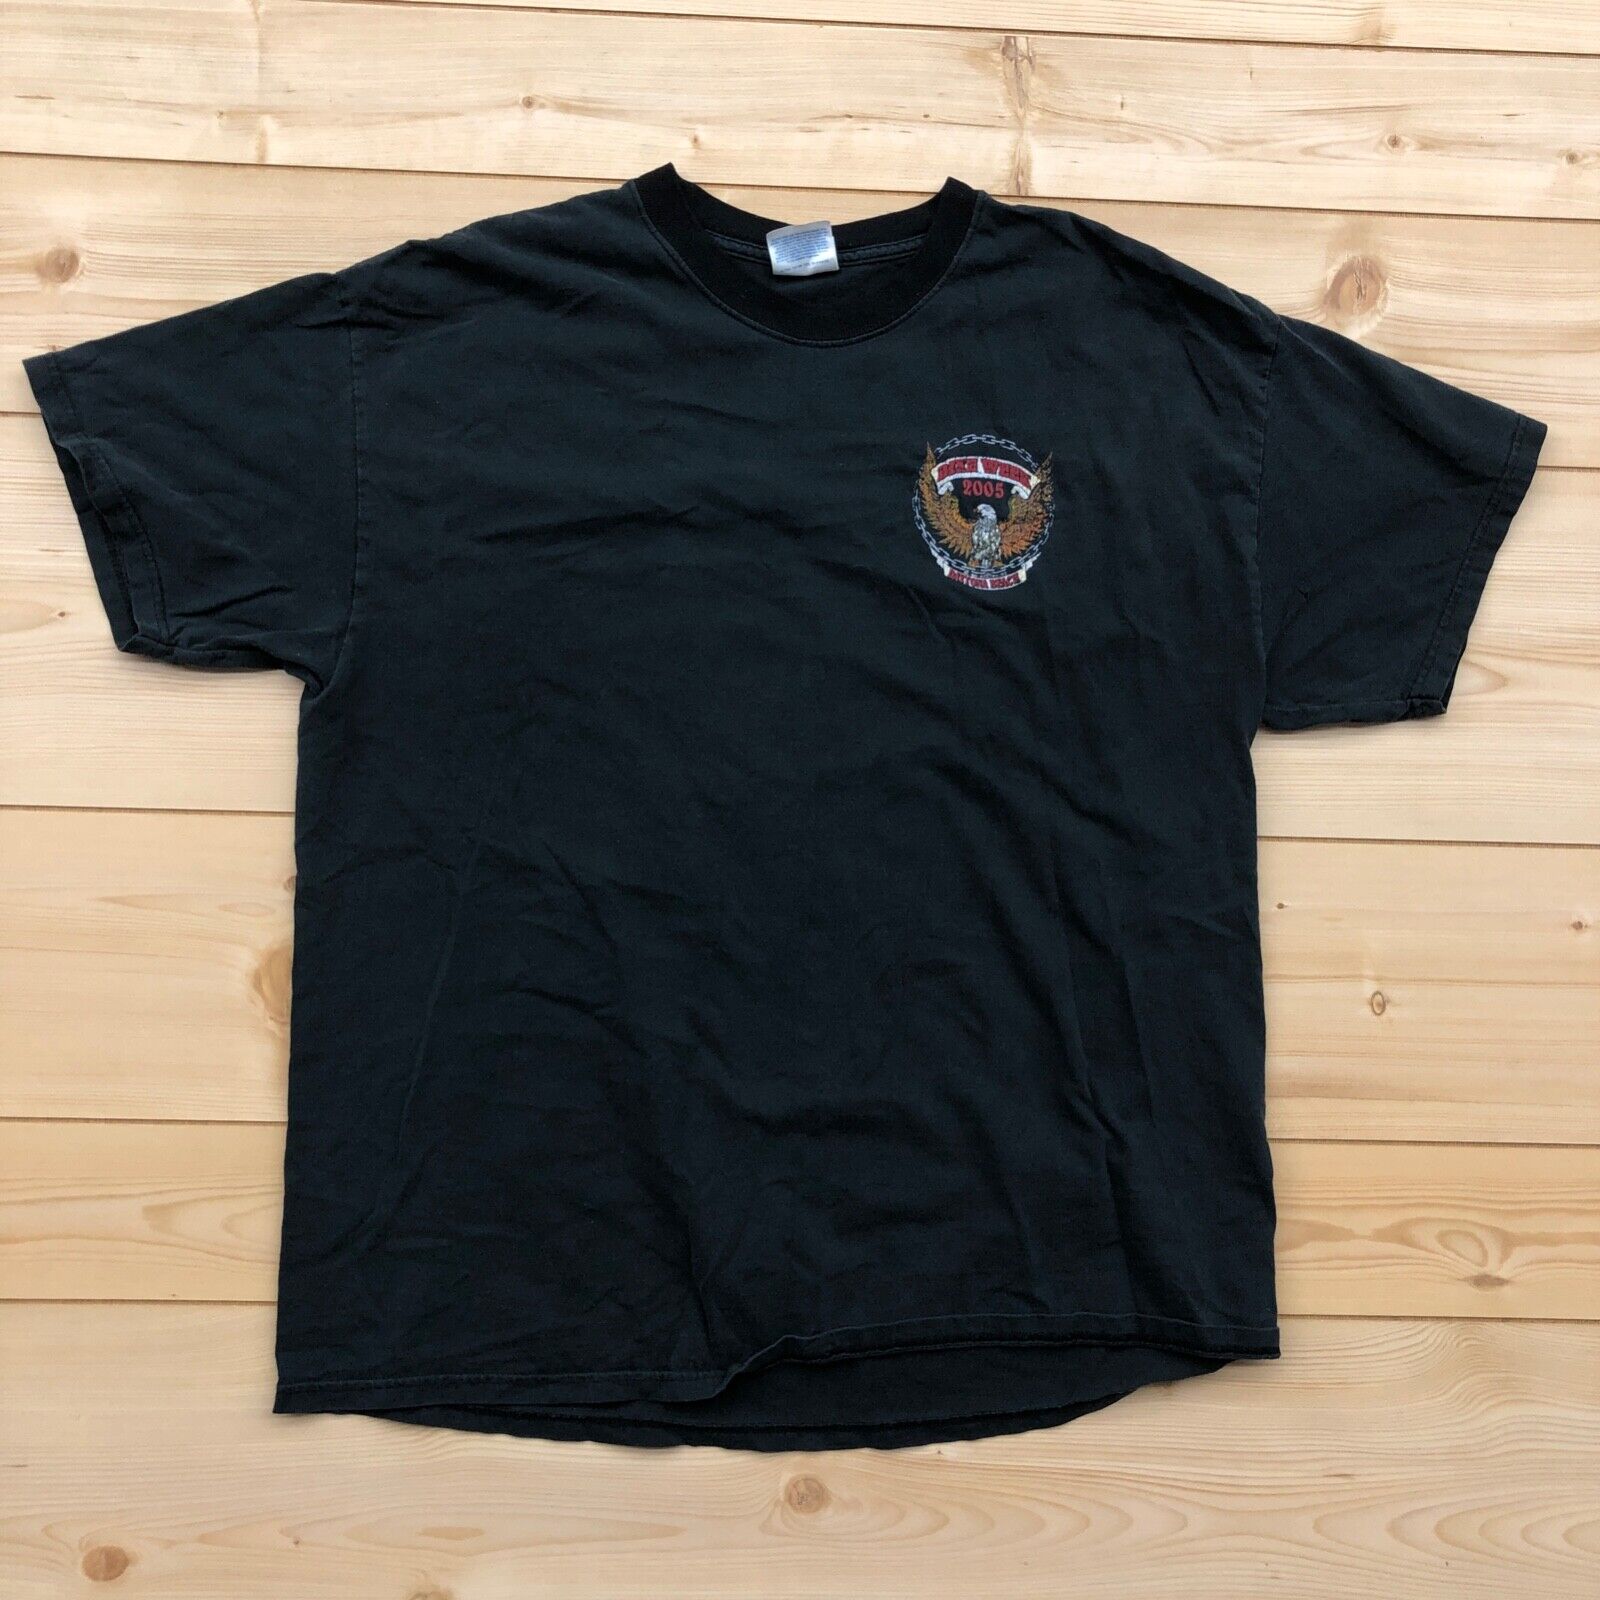 '05 Hanes Black Bike Week Daytona Beach Screaming Eagle T-Shirt Adult Size XL